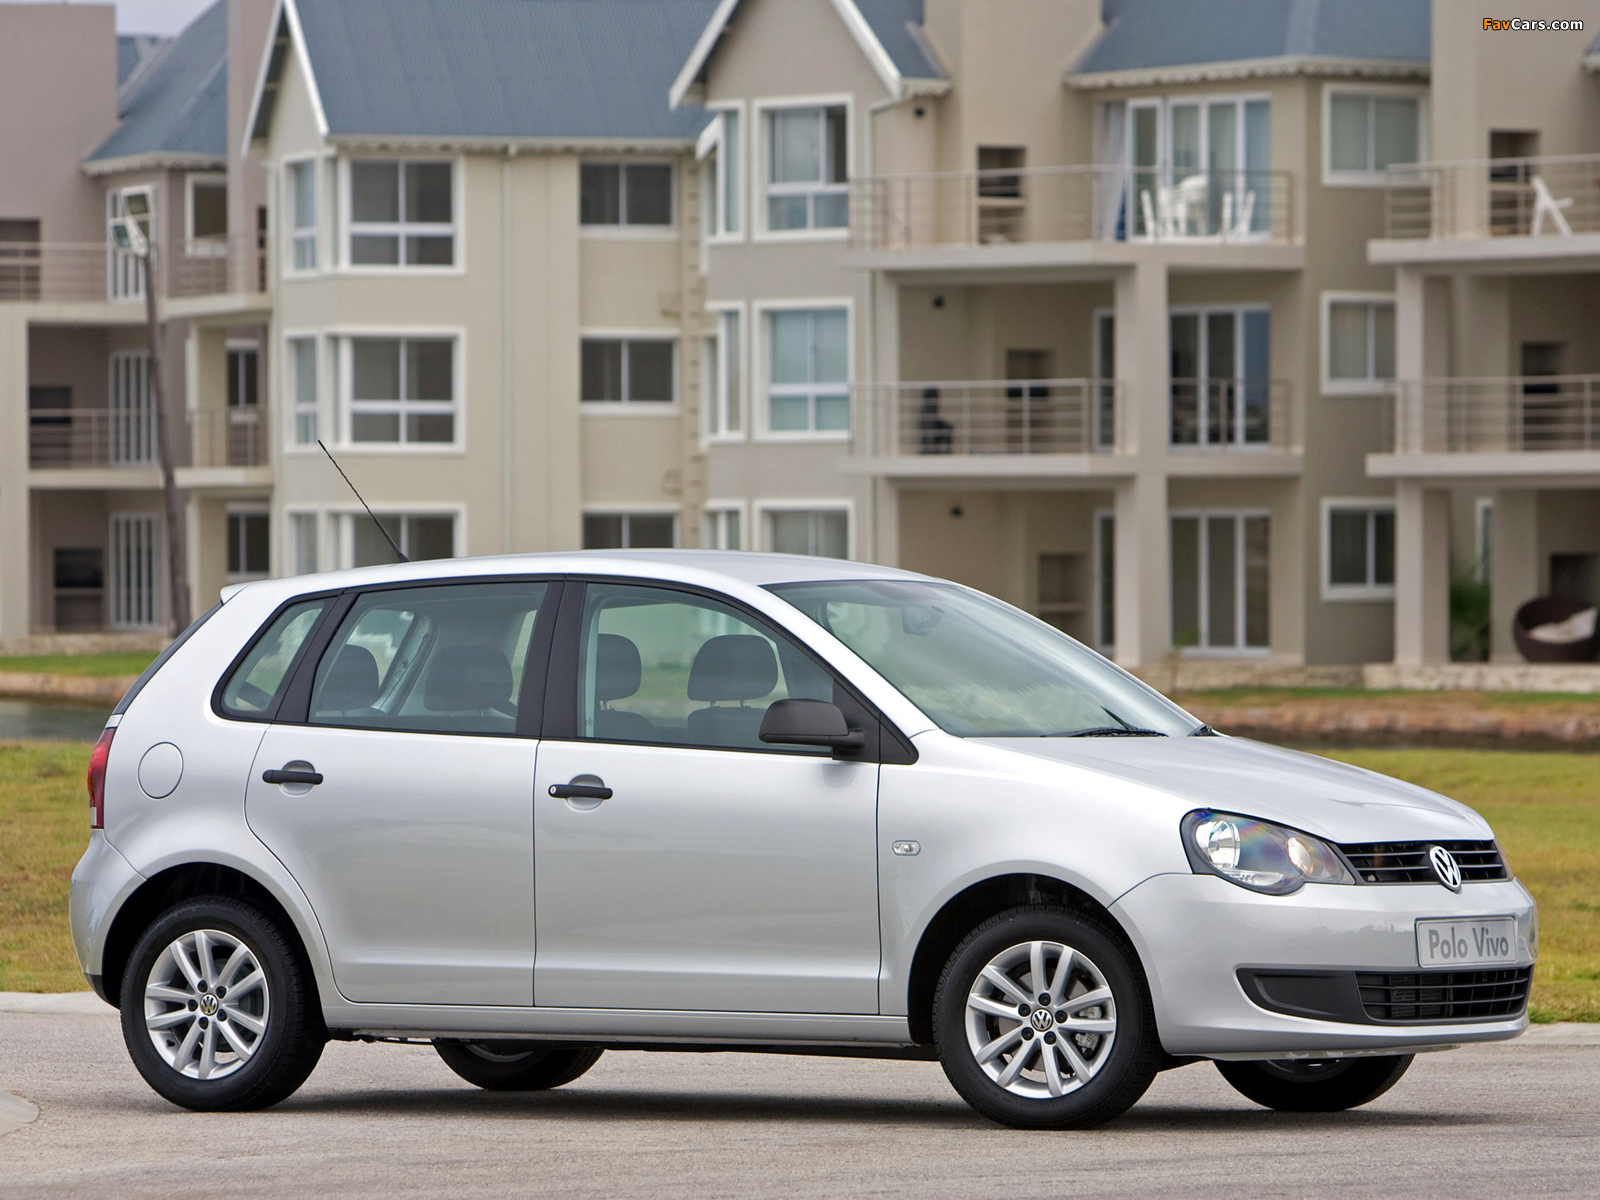 Volkswagen Polo Vivo Hatchback (IVf) 2010 pictures (1600 x 1200)